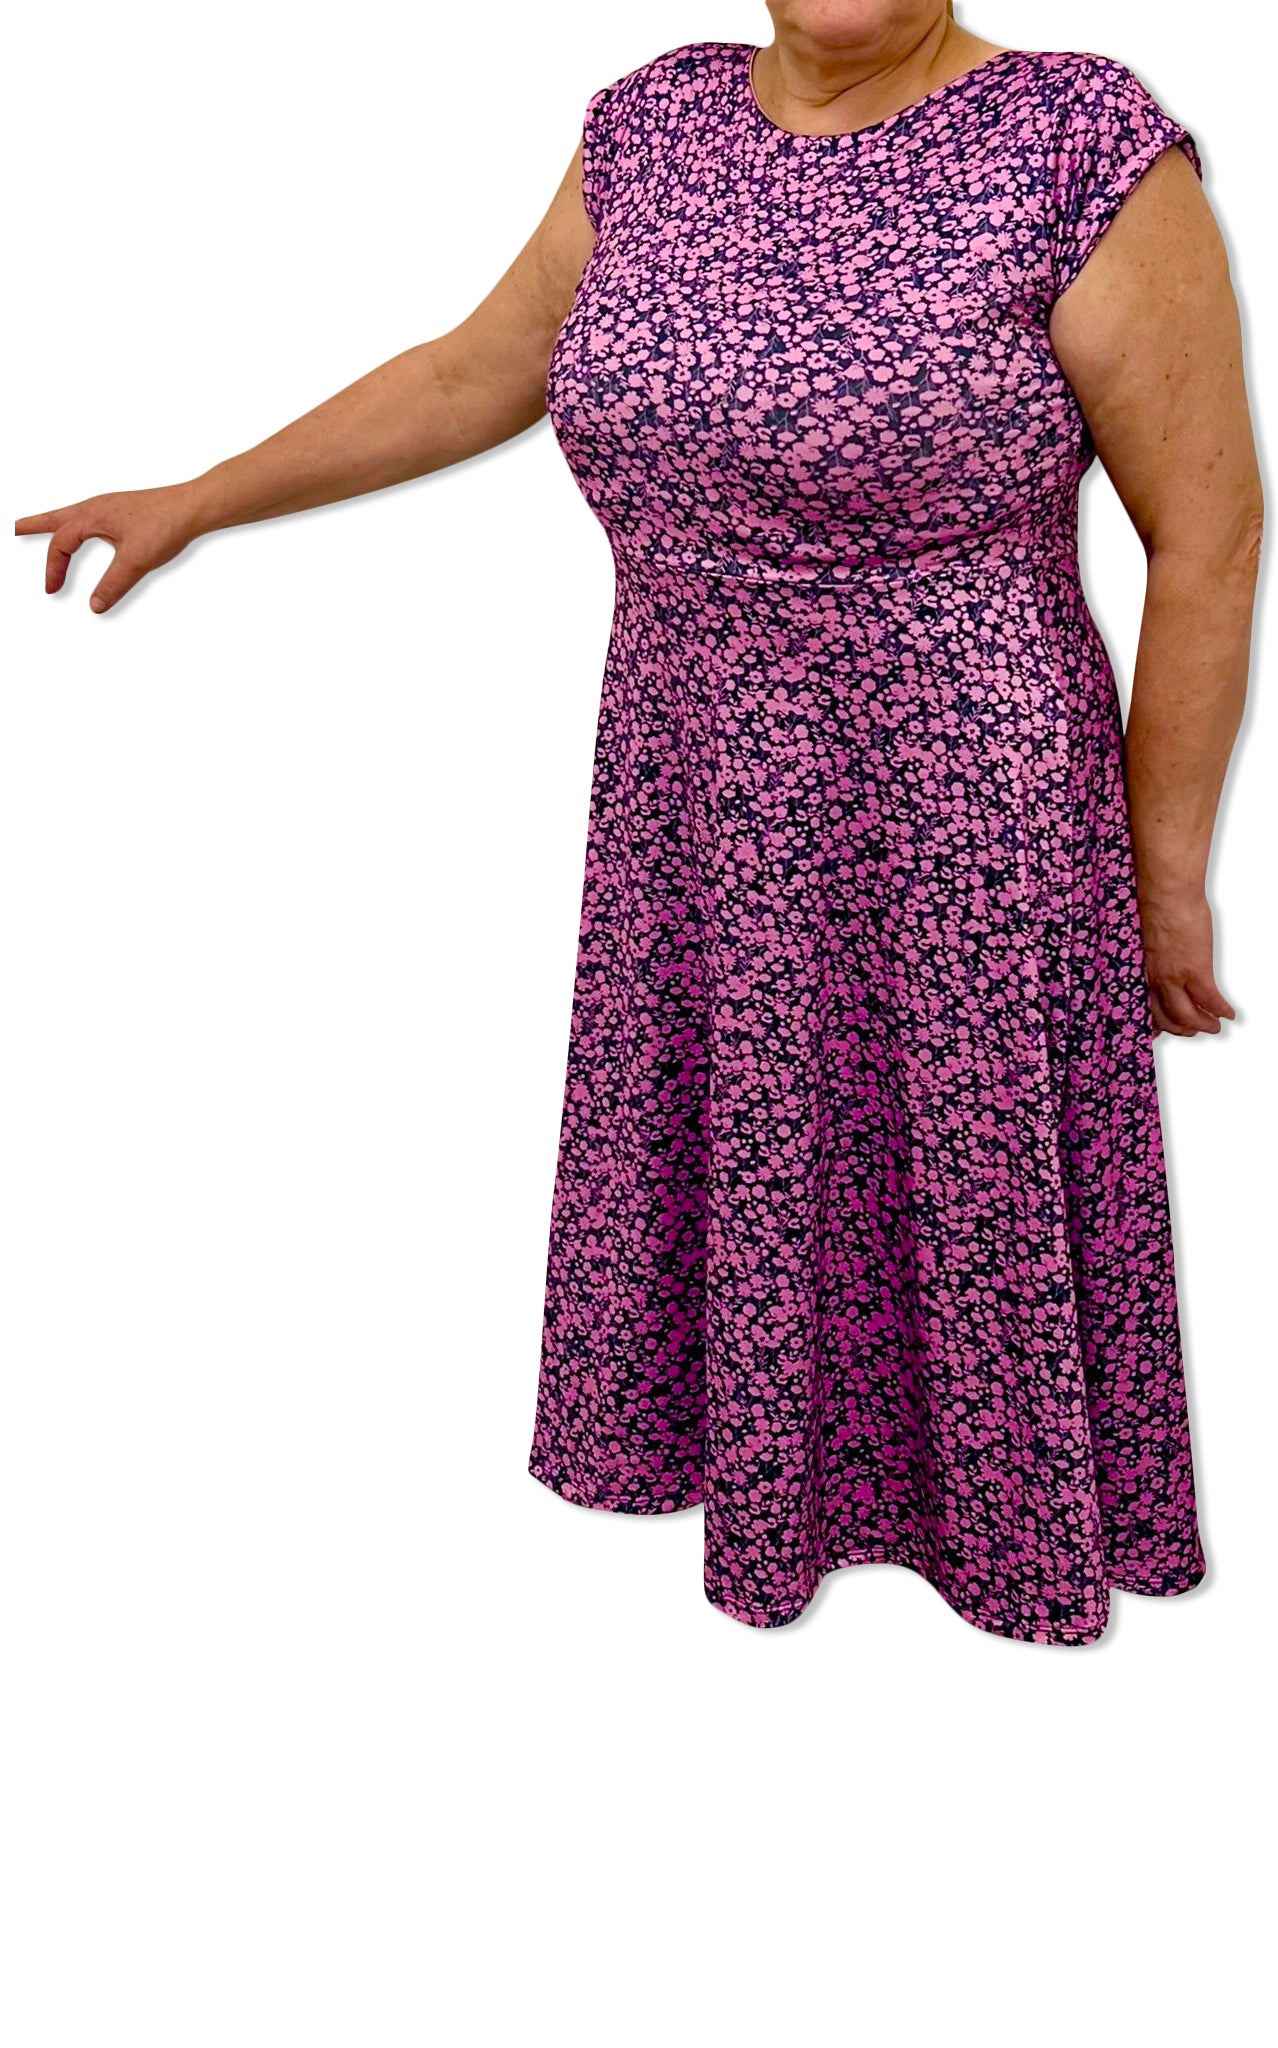 Miss Deseos Dress Size - XL